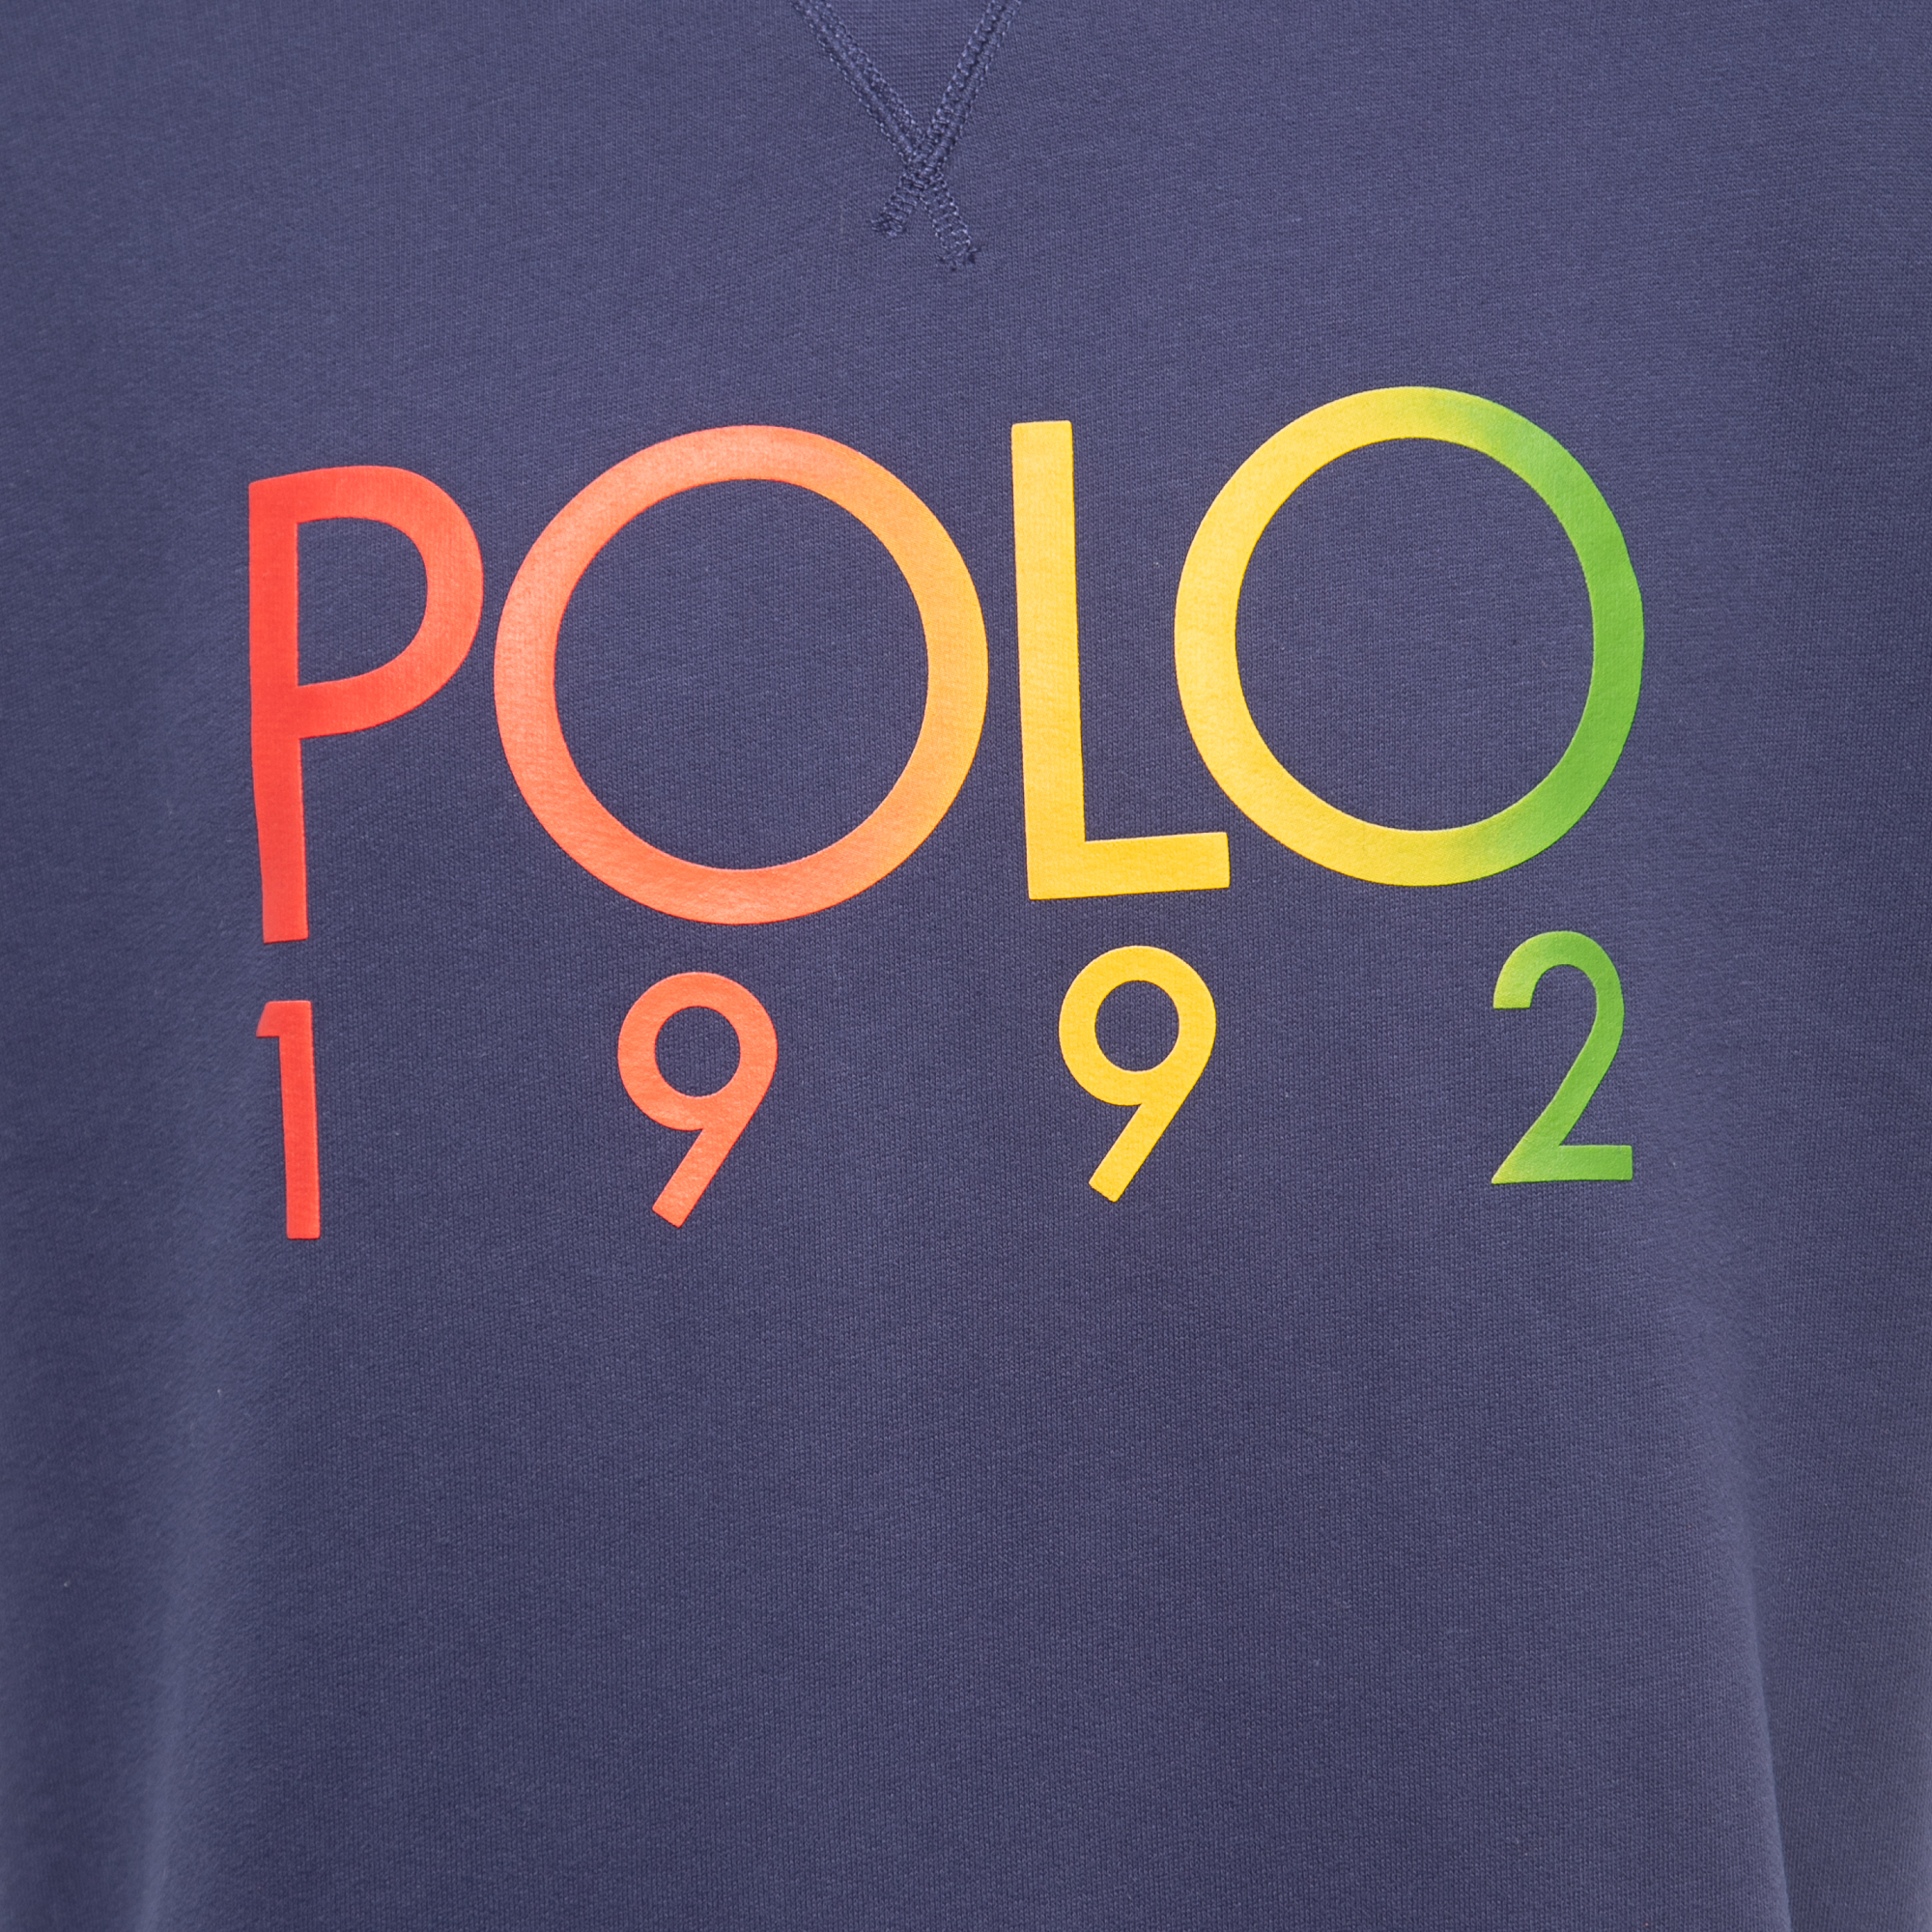 Polo Ralph Lauren Navy Blue Logo Printed Cotton Sweatshirt L